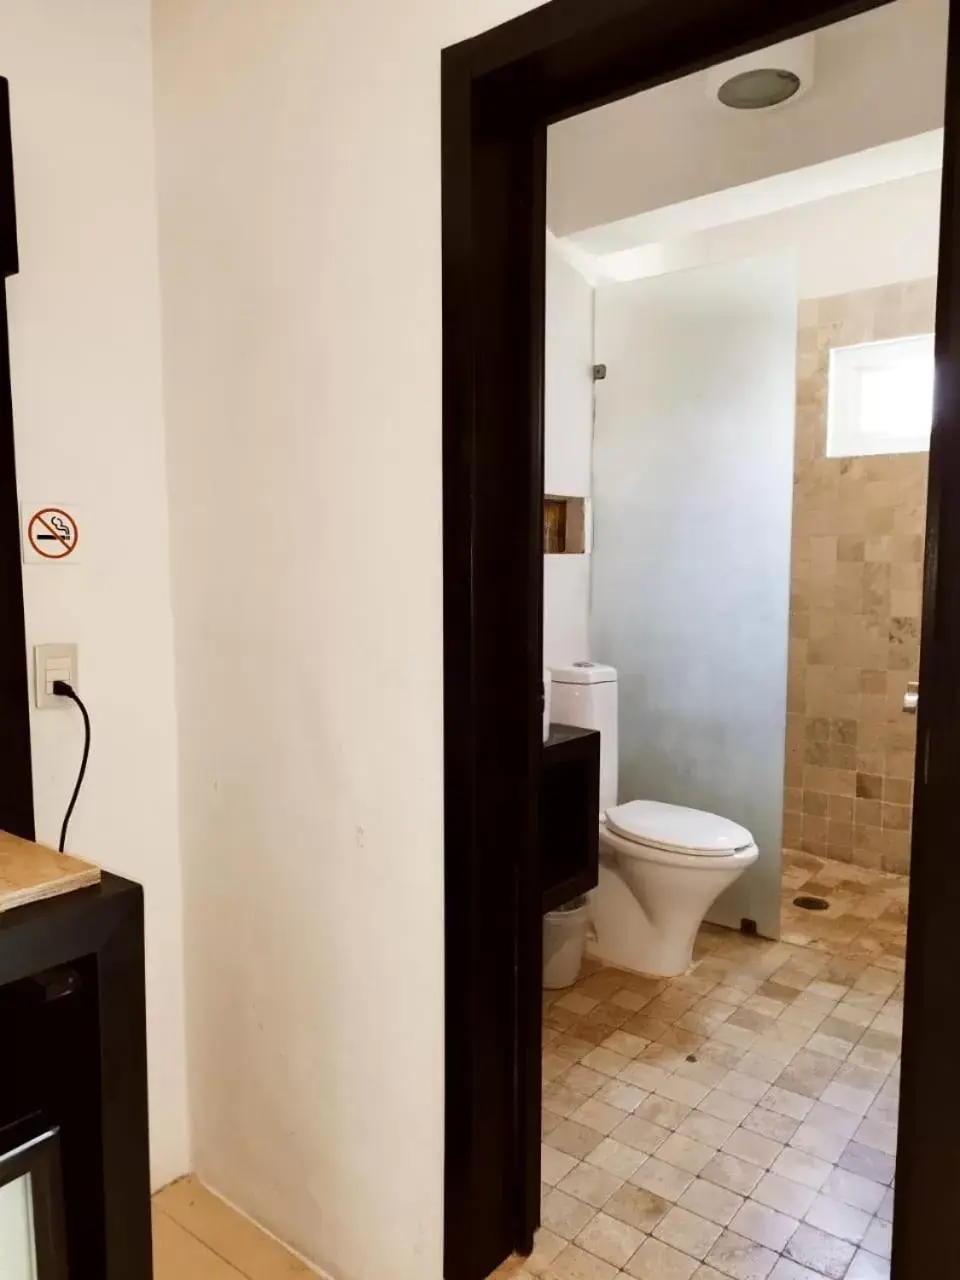 Bathroom in BLVD Hotel - 5th Avenue, Playa del Carmen